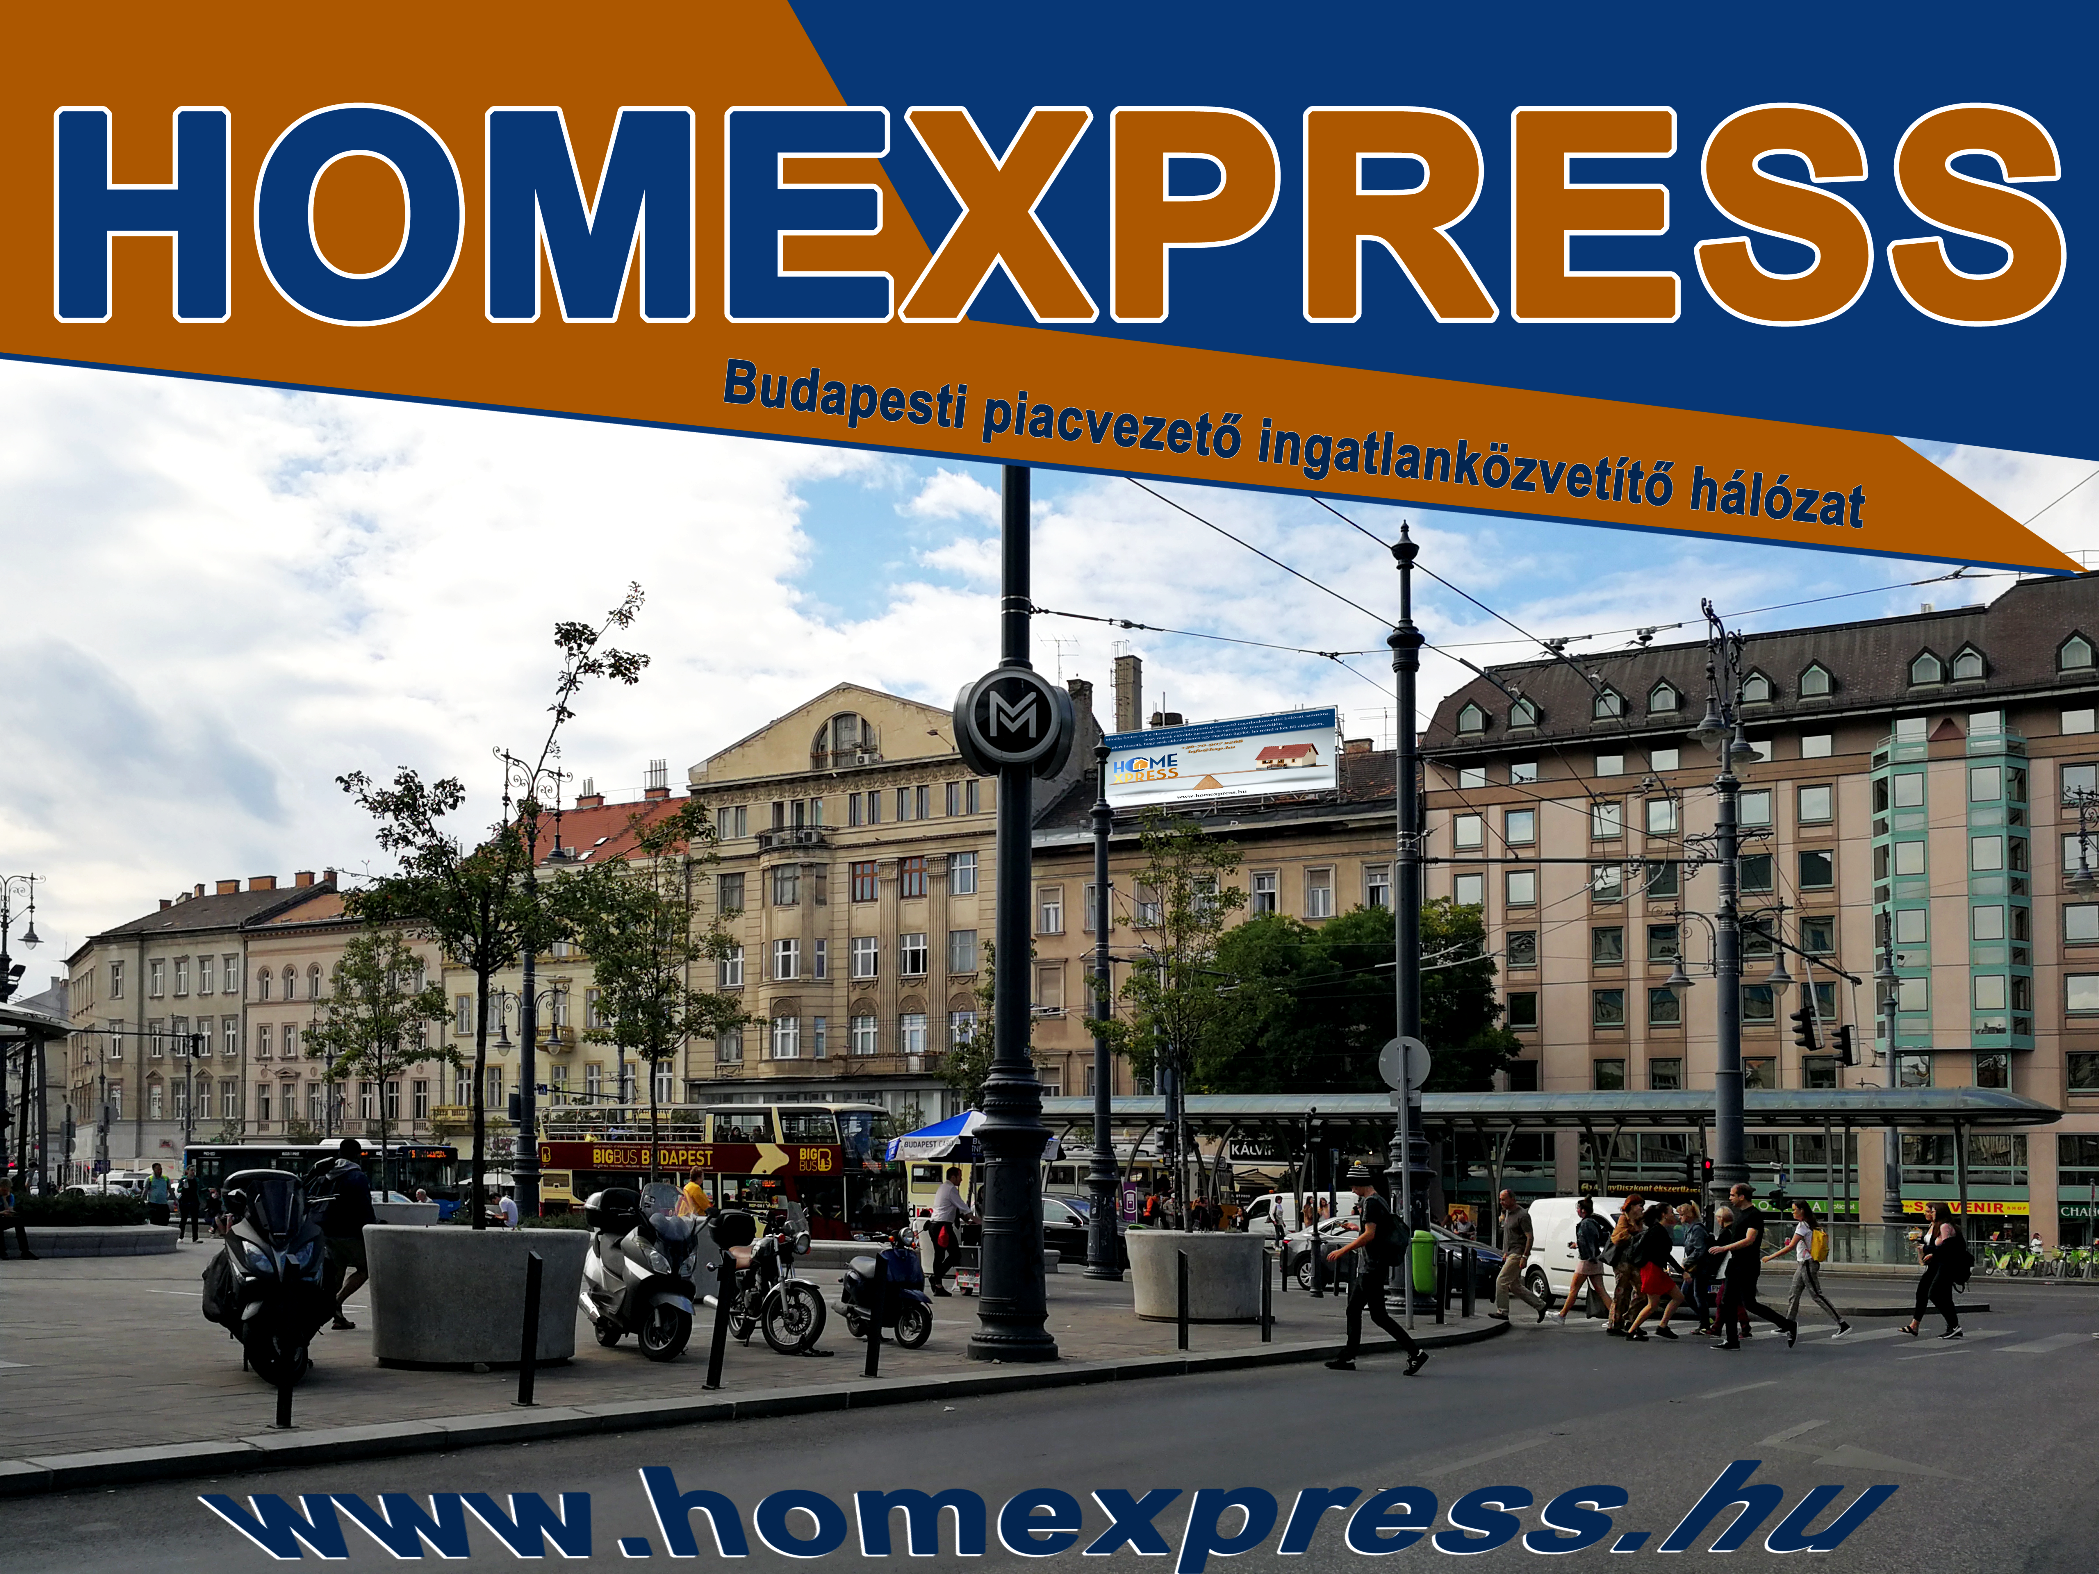 piacvezeto-ingatlanos-budapesten-a-homexpress_hu.png